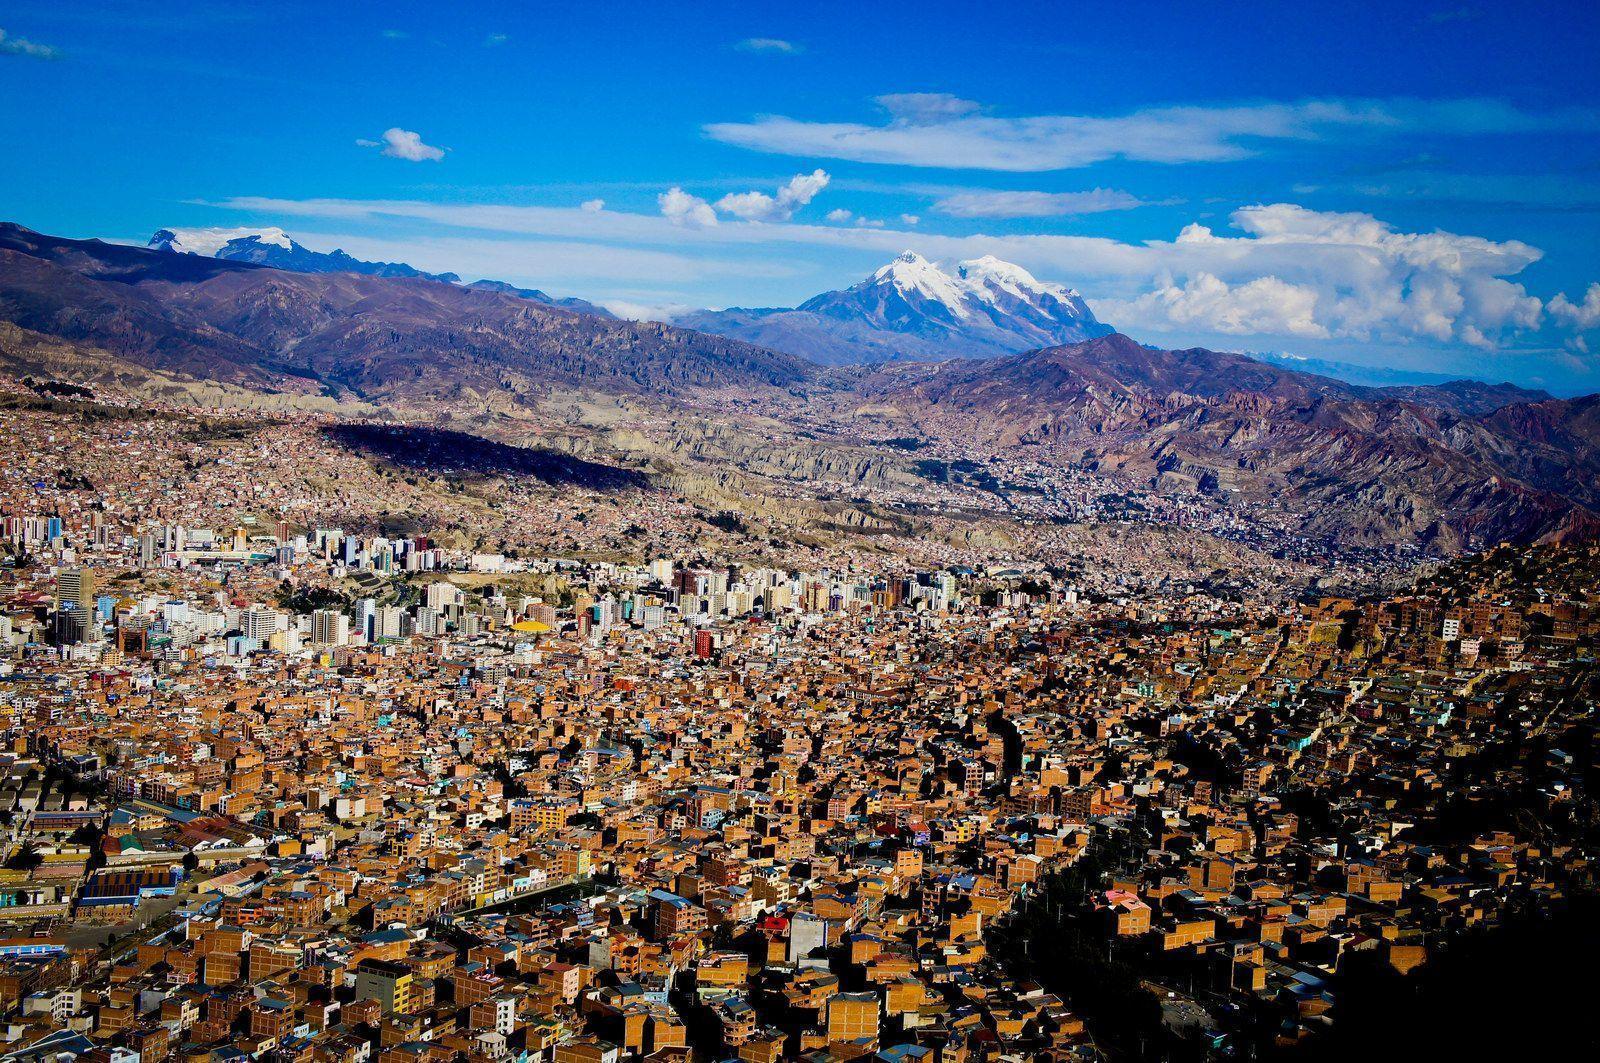 bolivia. Bolivia La Paz Photo photo, wallpaper. Balloonin' N